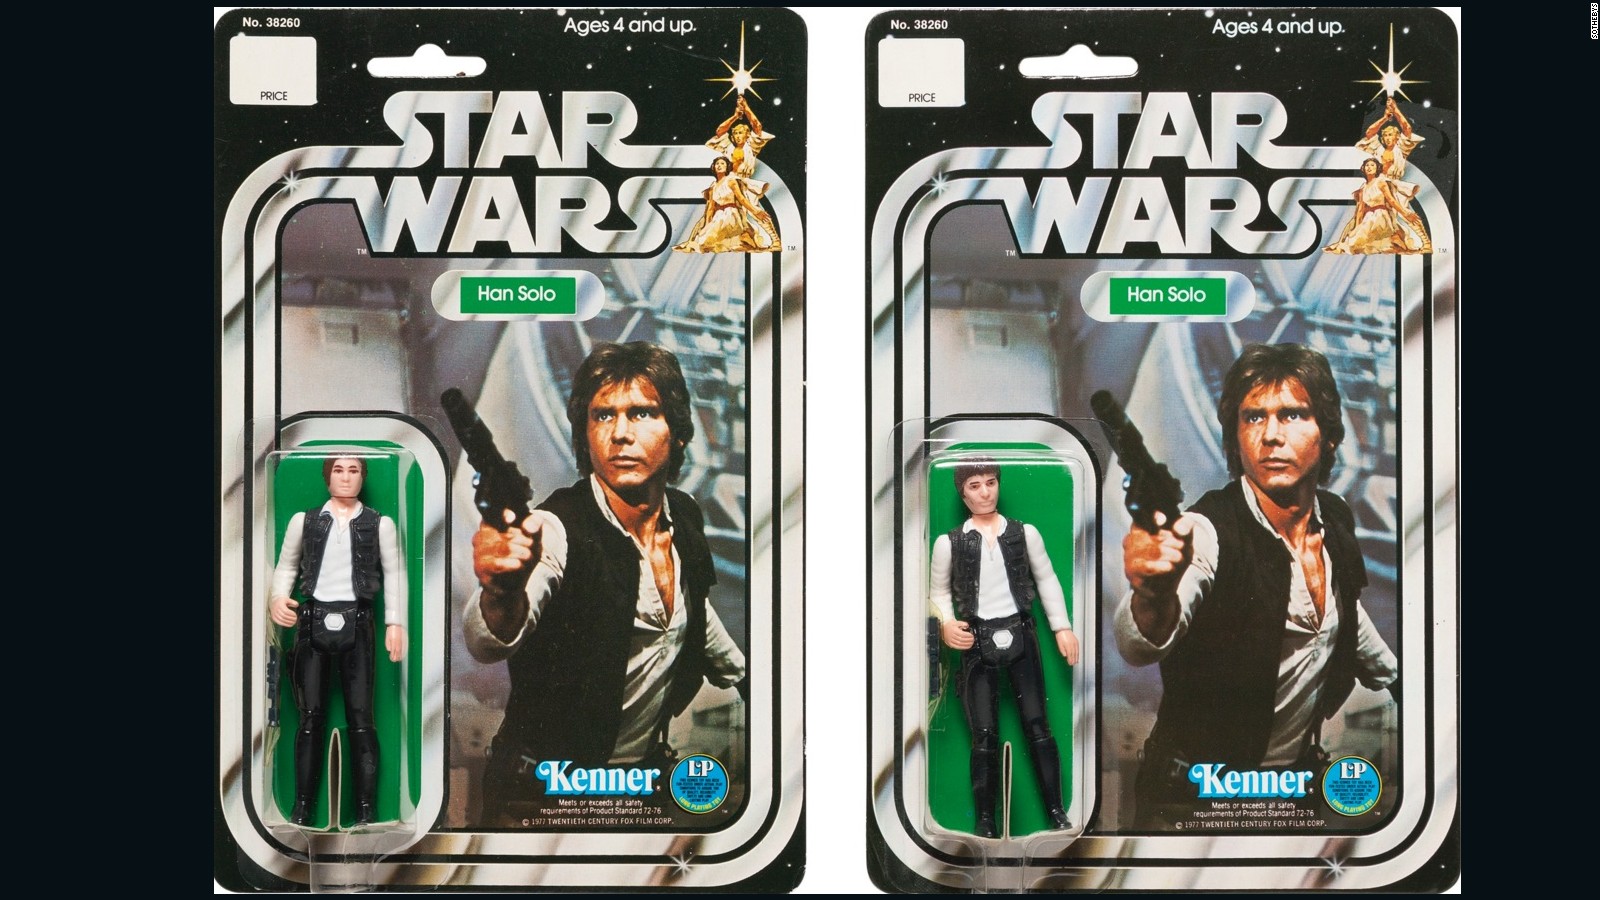 1977 star wars figures for sale